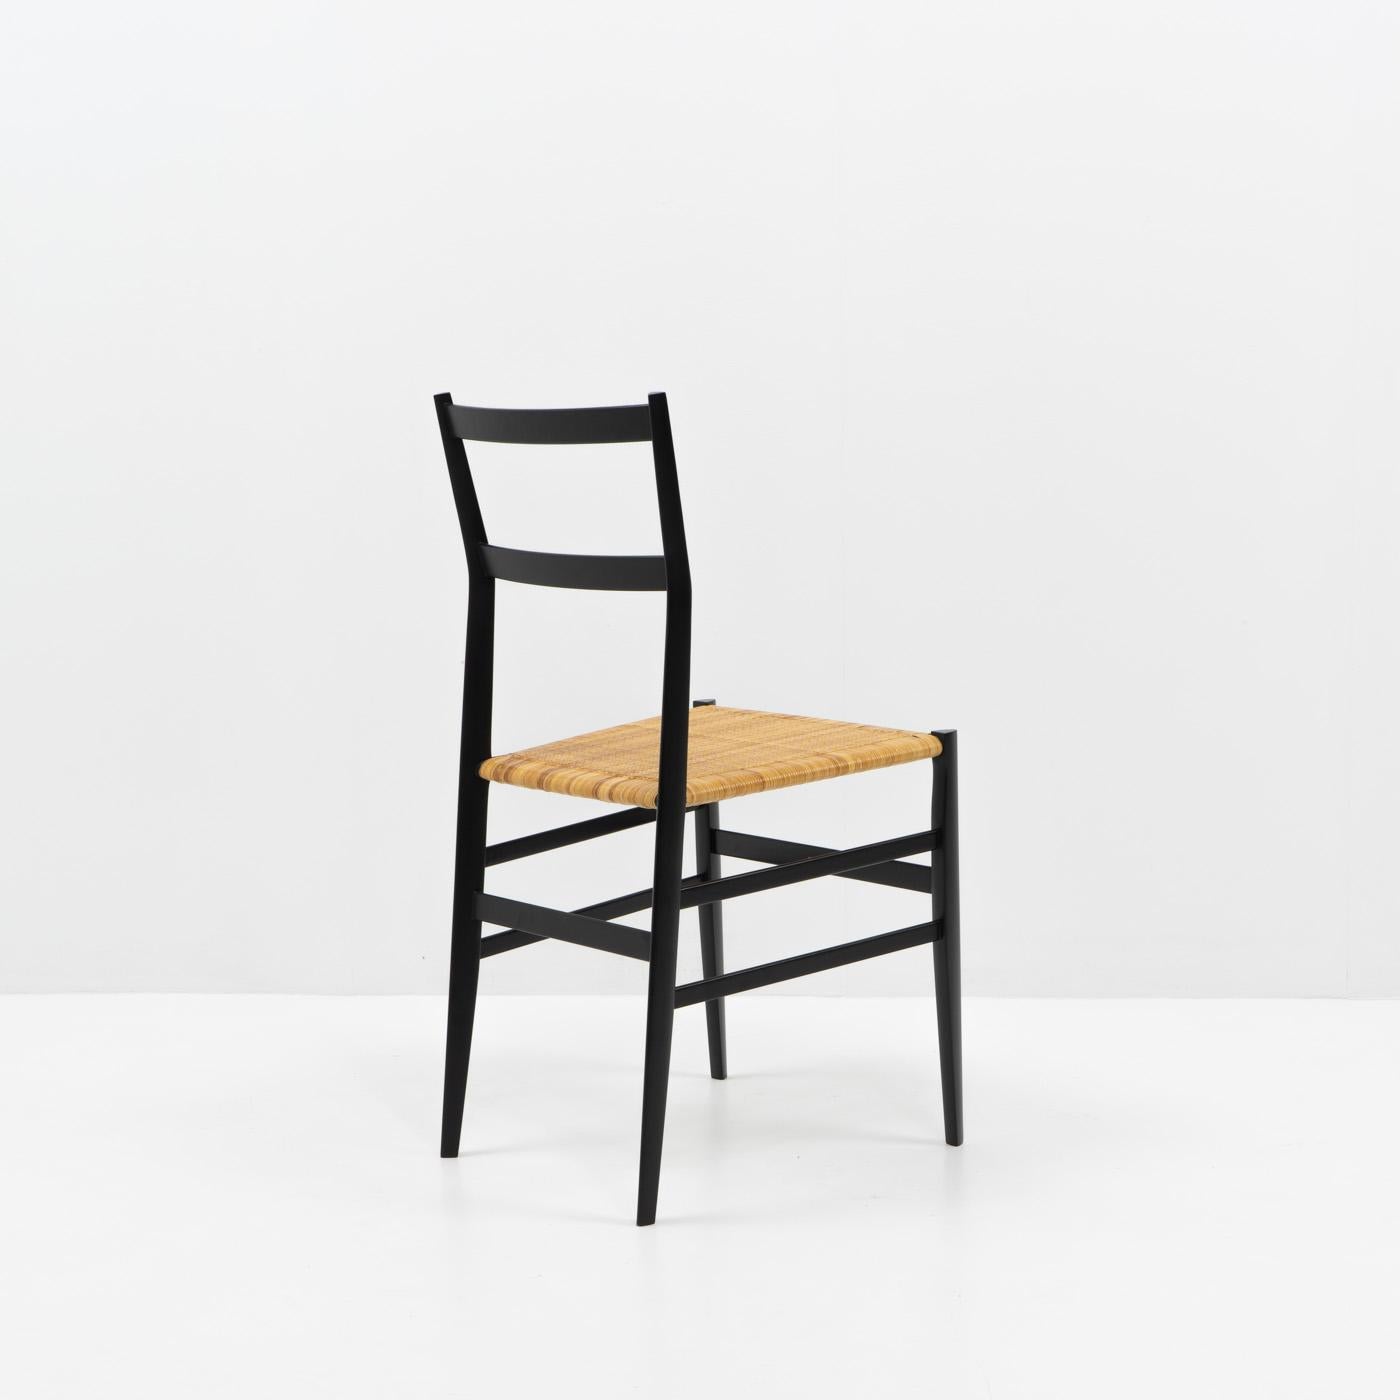 Italian Design Classic Gio Ponti, Superleggera Chair, Cassina, 2000s For Sale 6